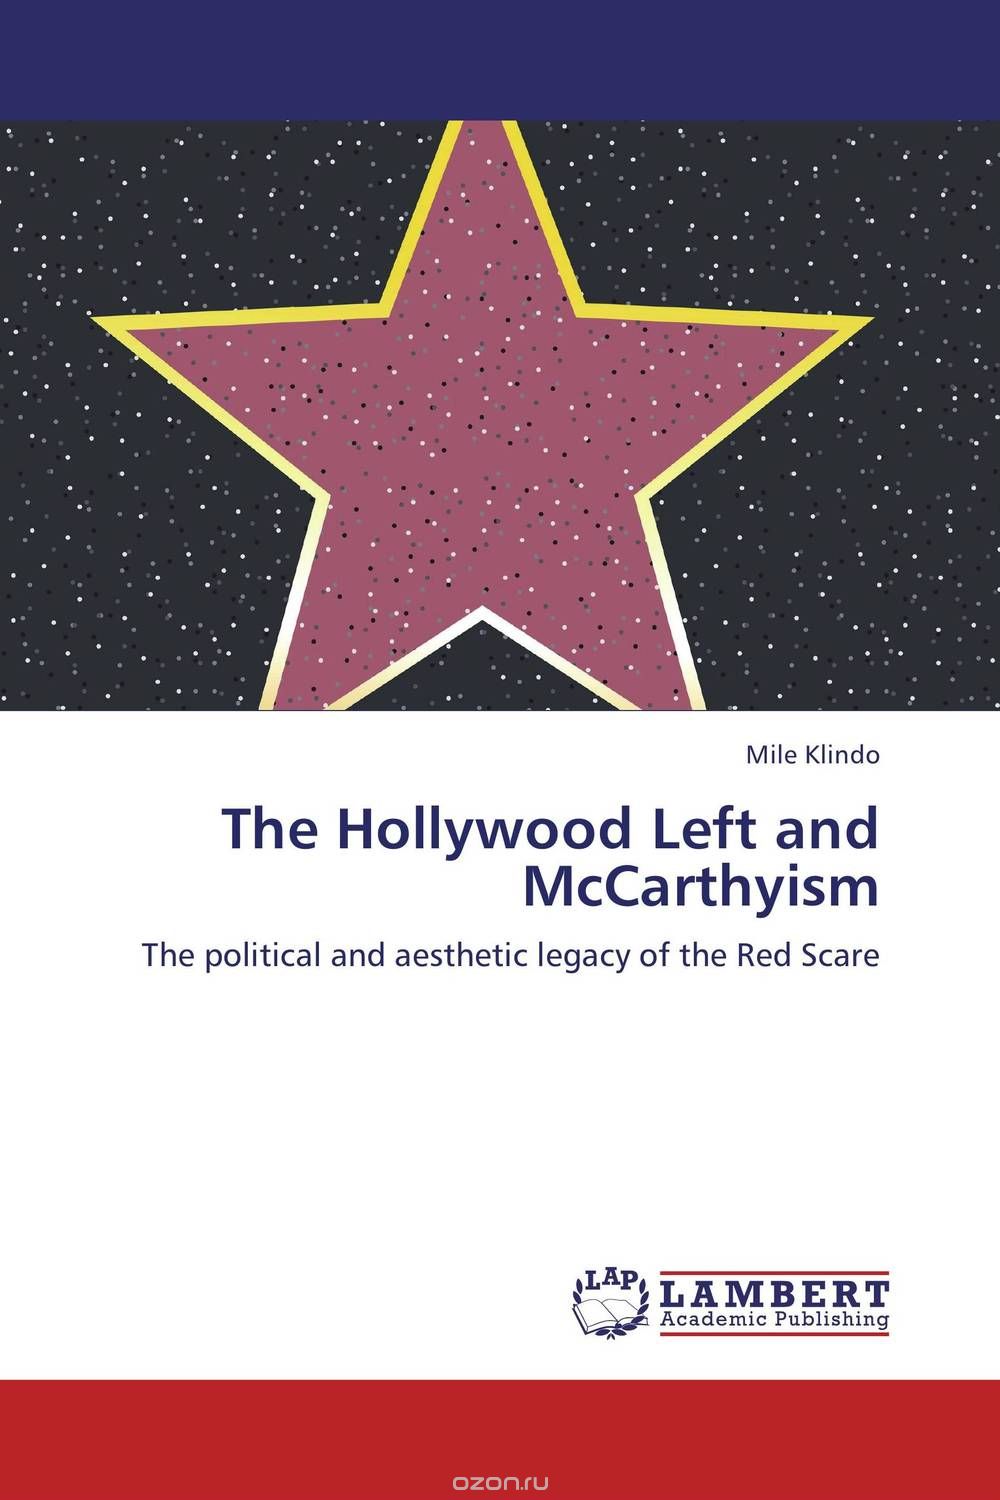 Скачать книгу "The Hollywood Left and McCarthyism"